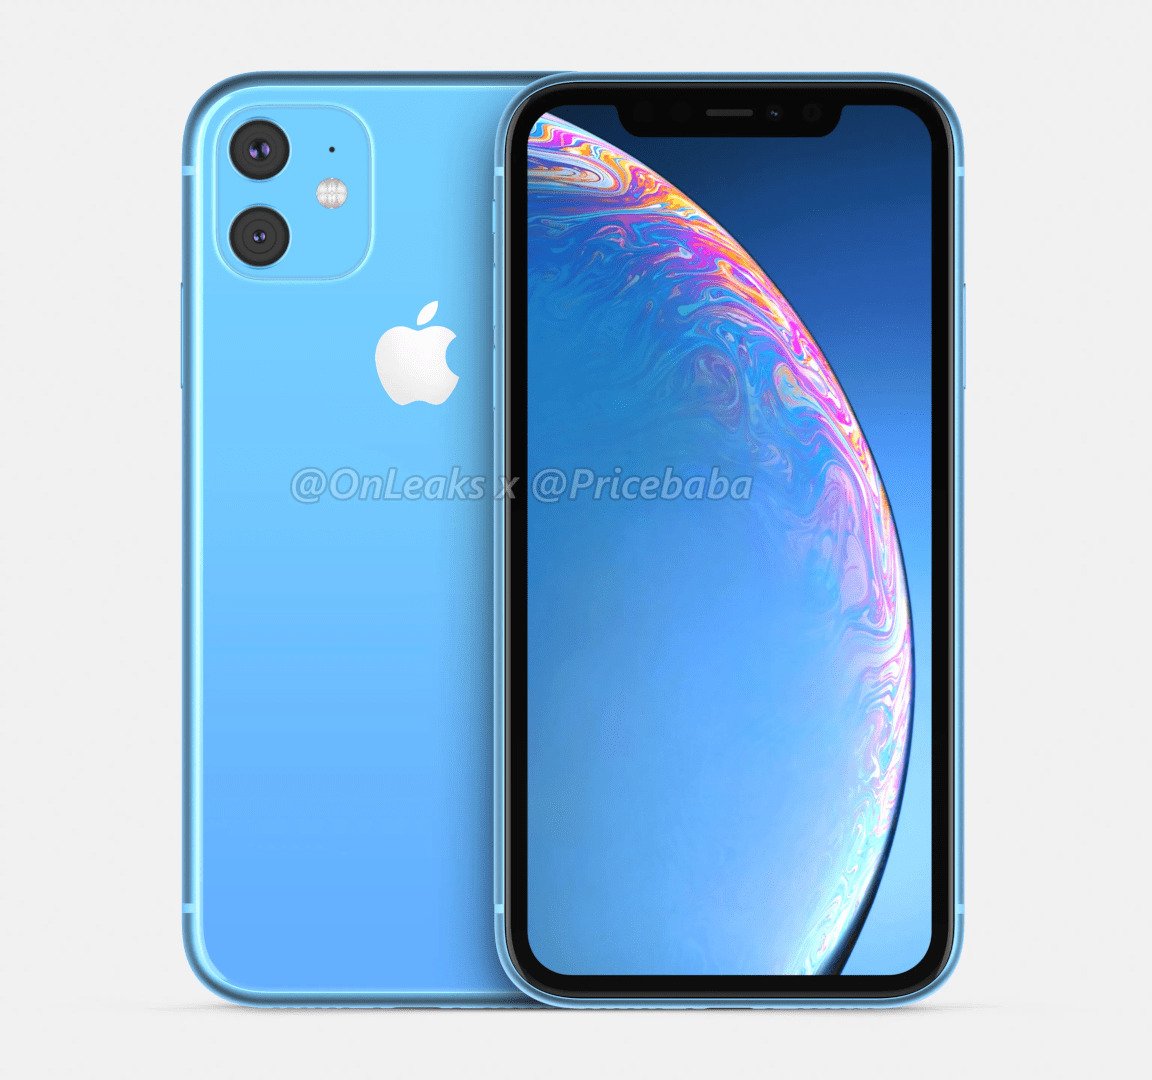 Apple iPhone XR (2019) - Blue